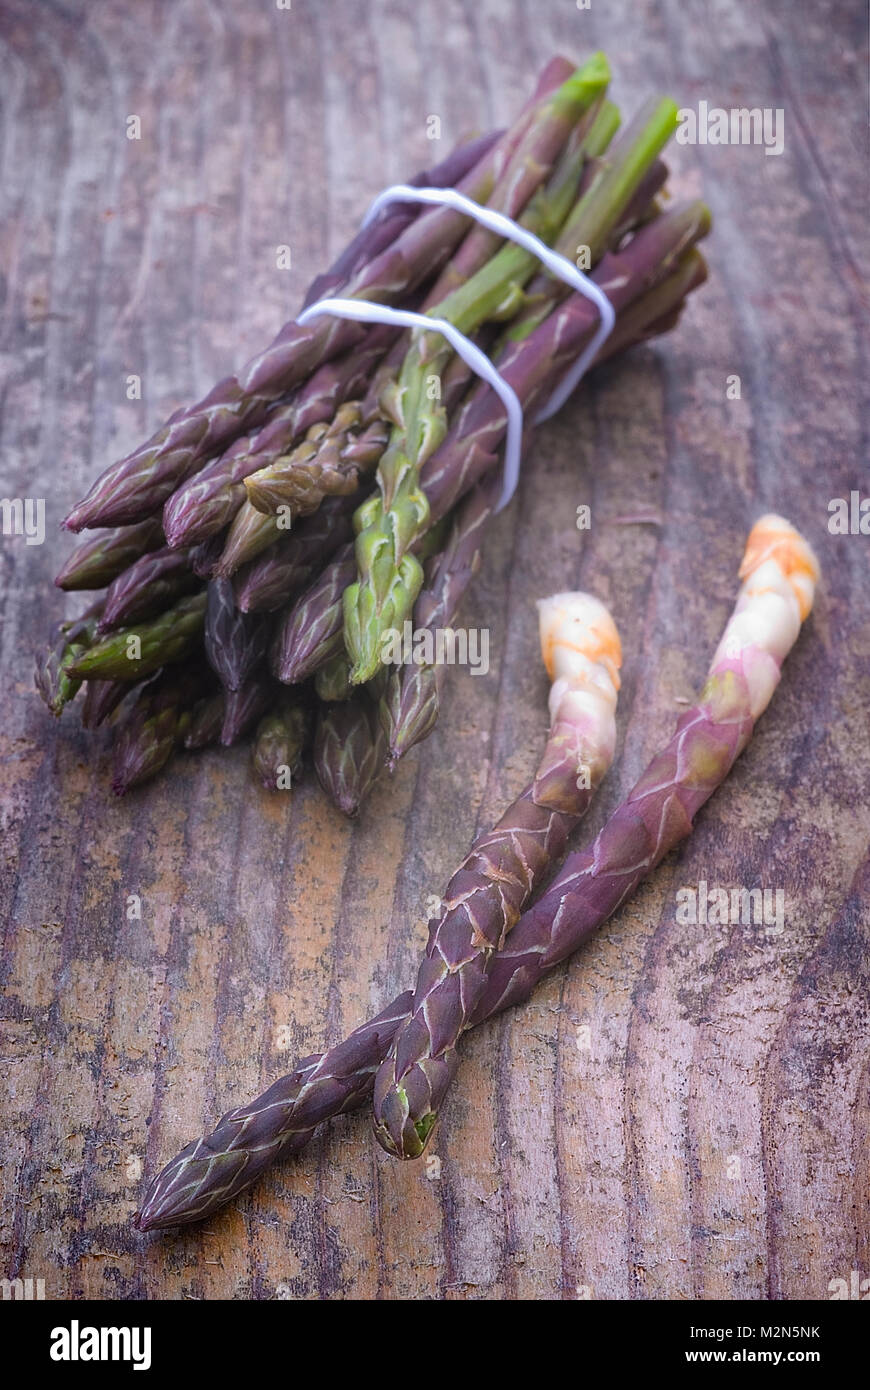 Bunch of wild asparagus  (Asparagus acutifolius) on wooden table Stock Photo